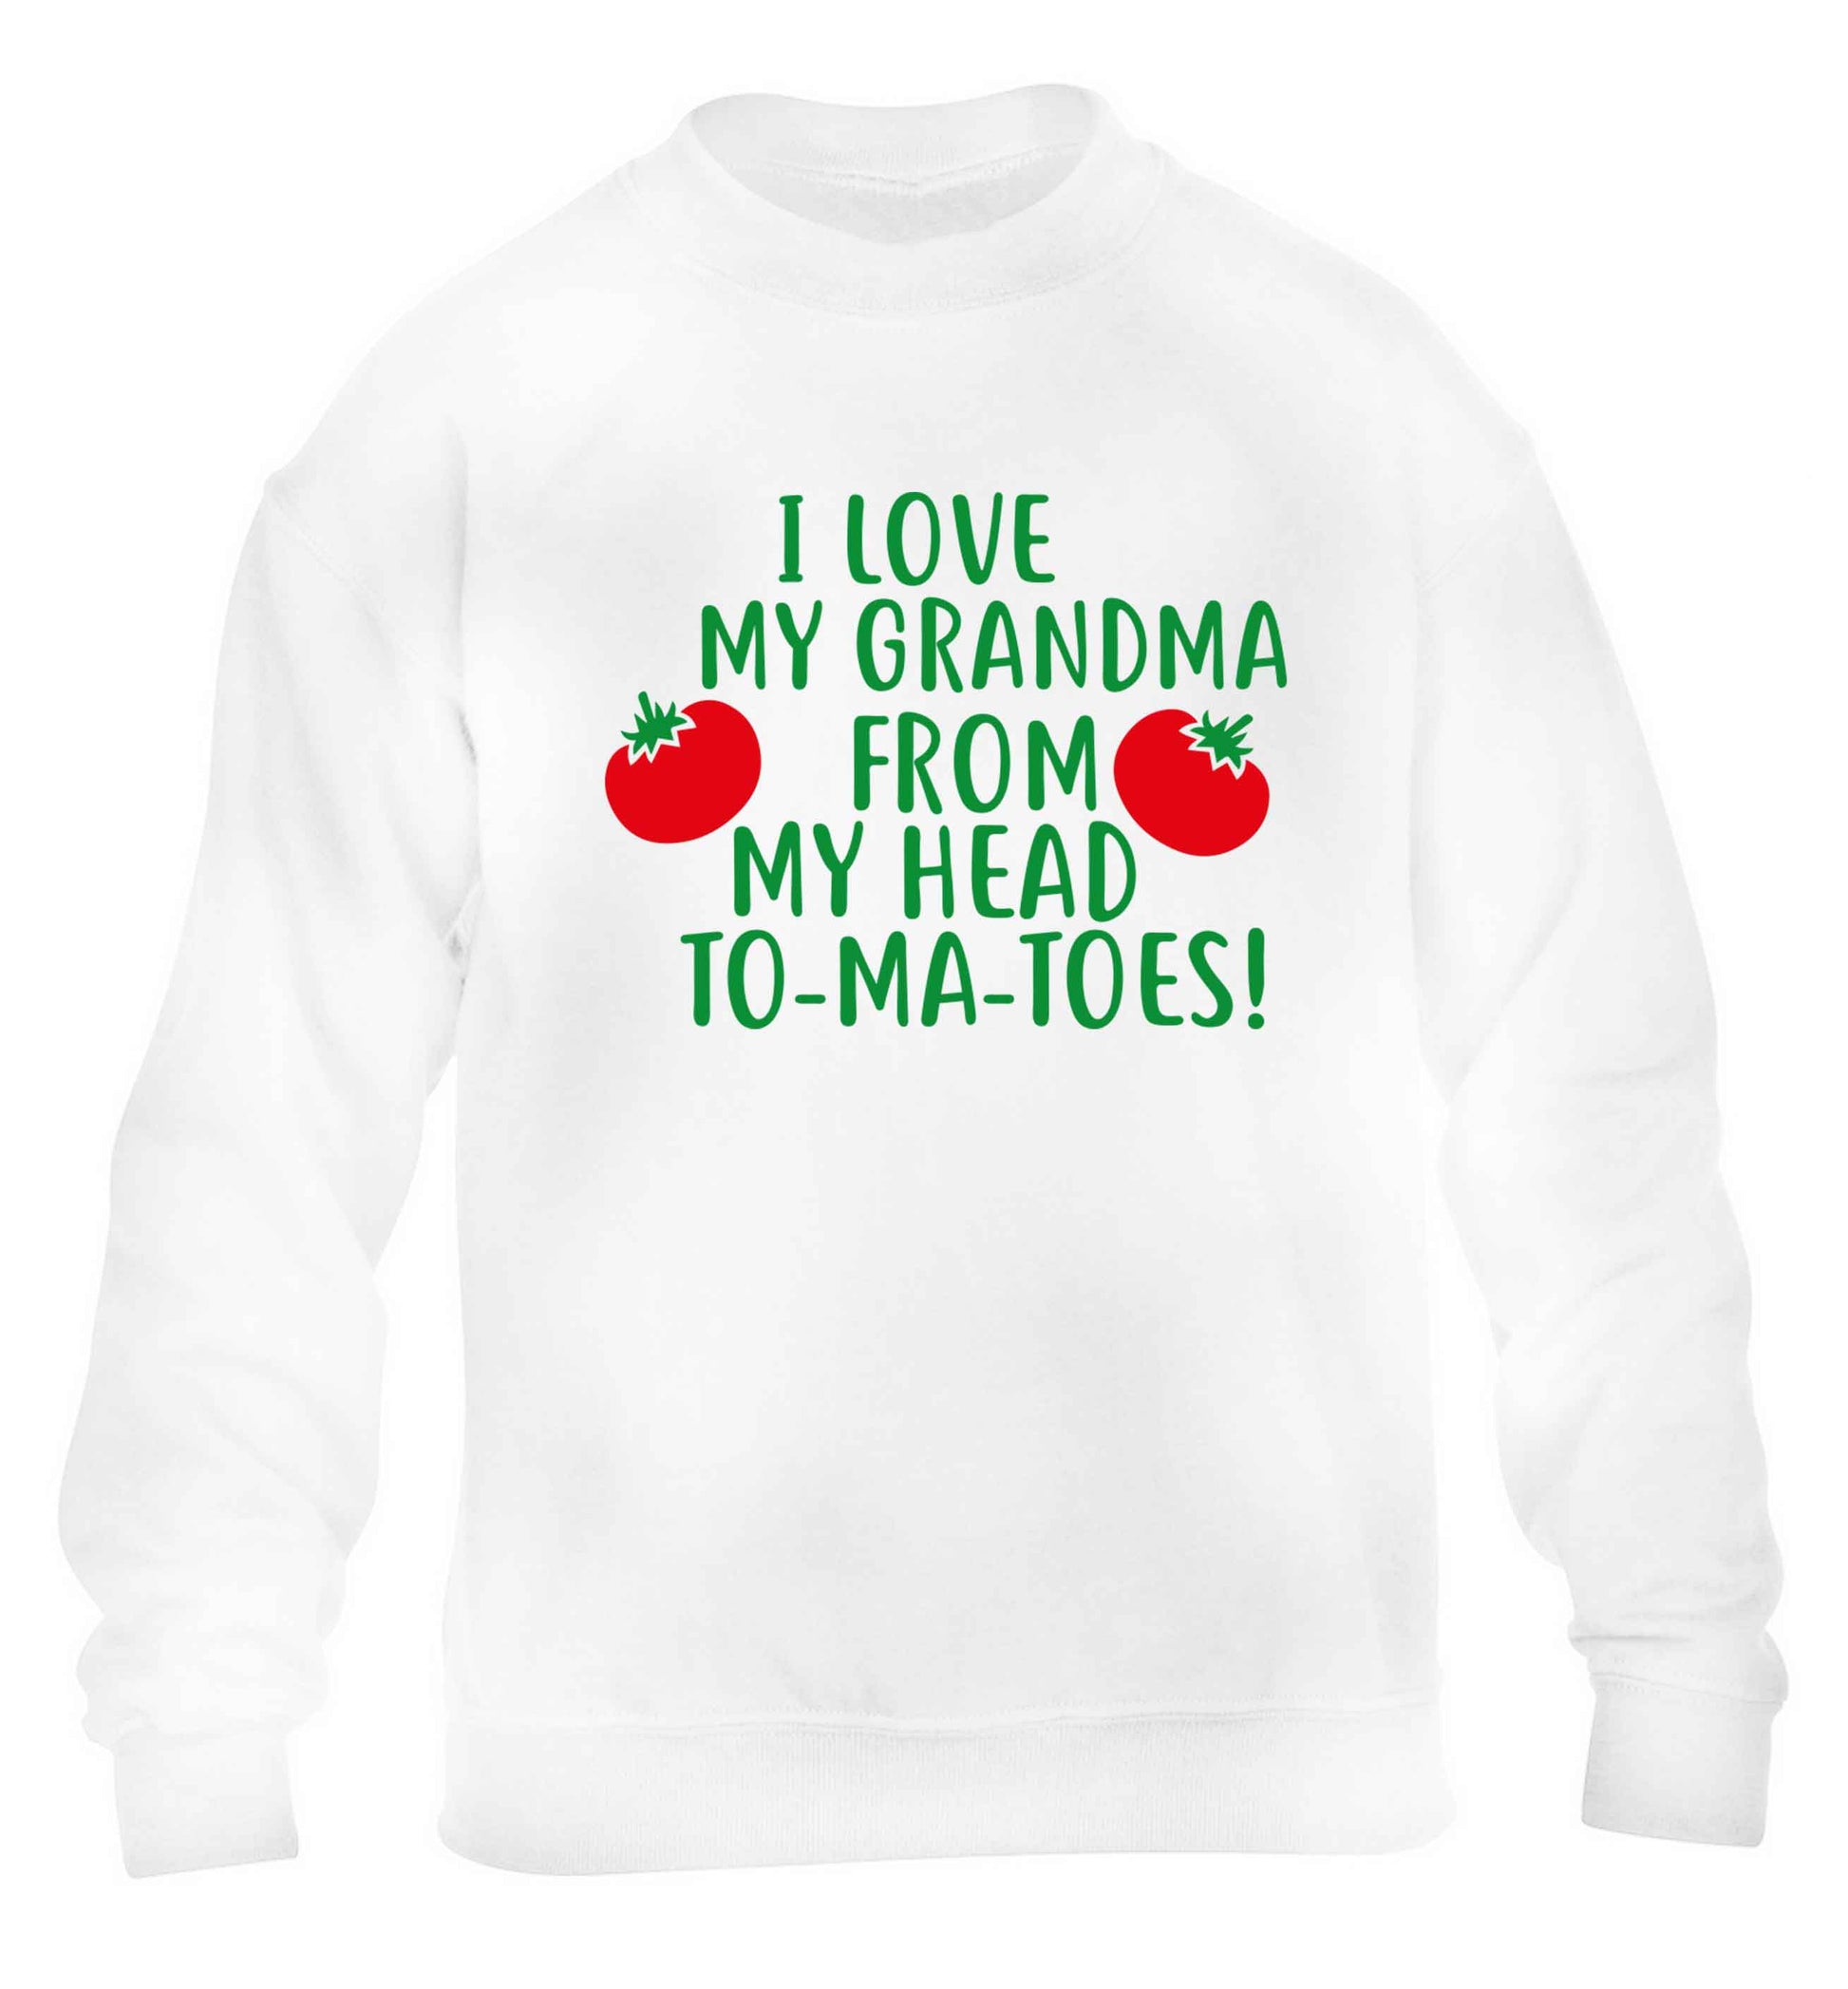 I love my grandma from my head to-ma-toes children's white sweater 12-13 Years